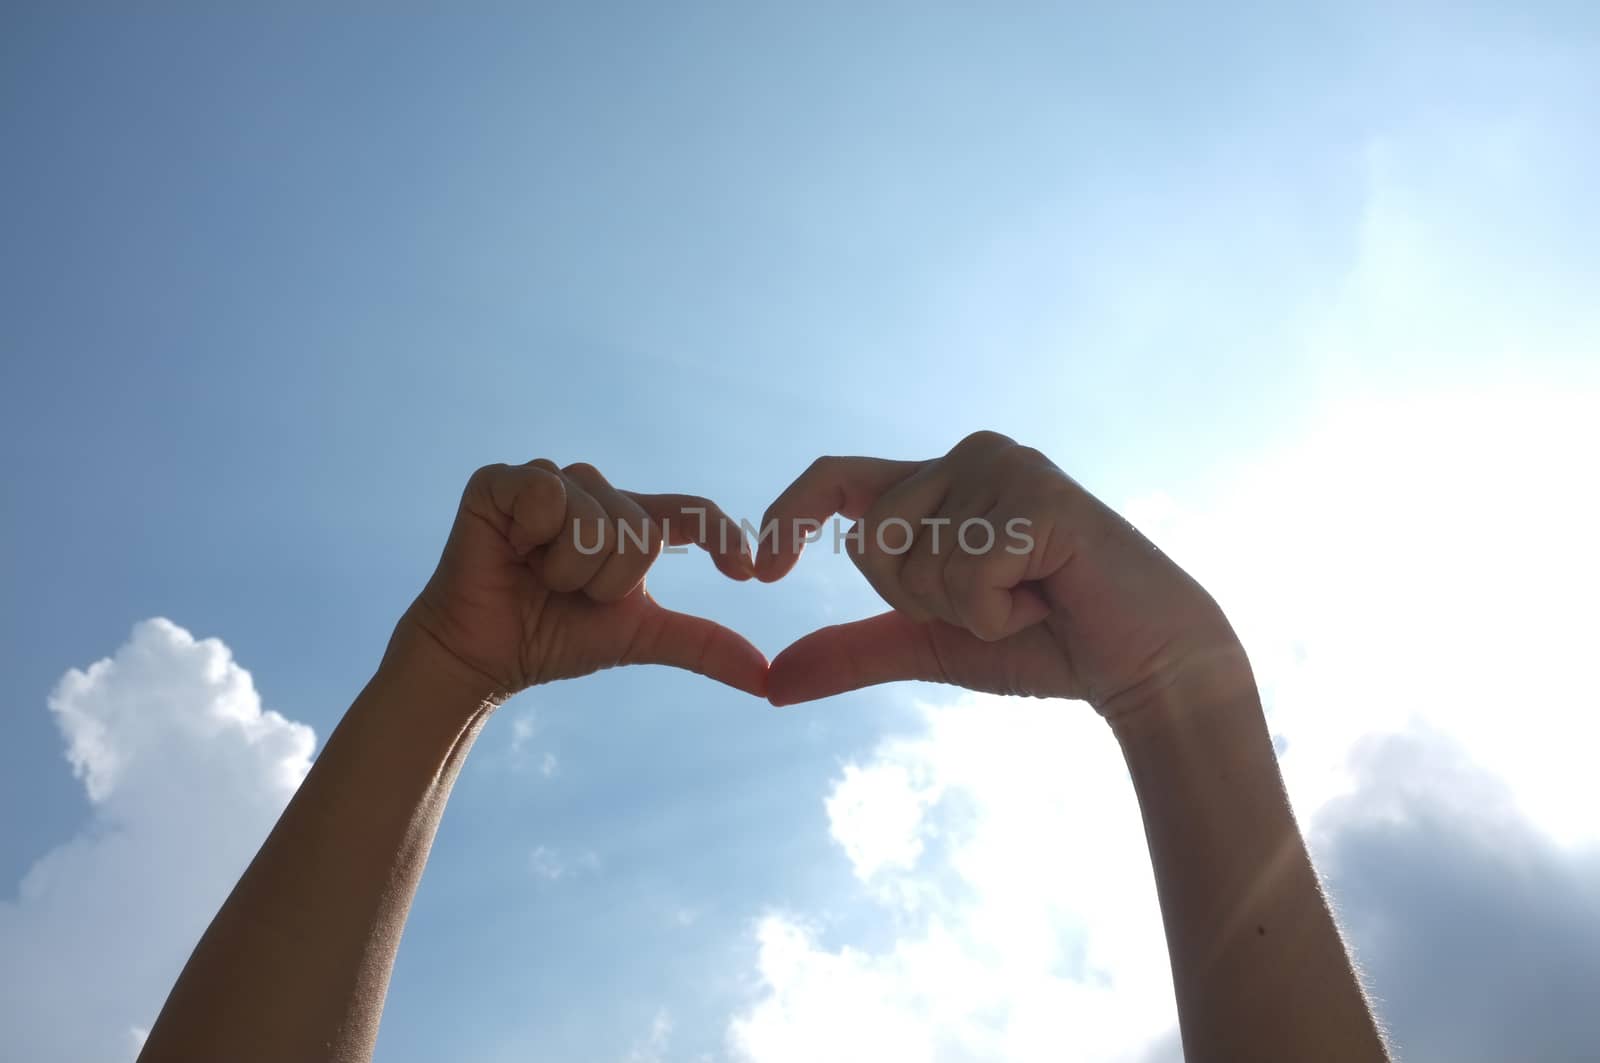 Hands shape of heart beneath blue sky